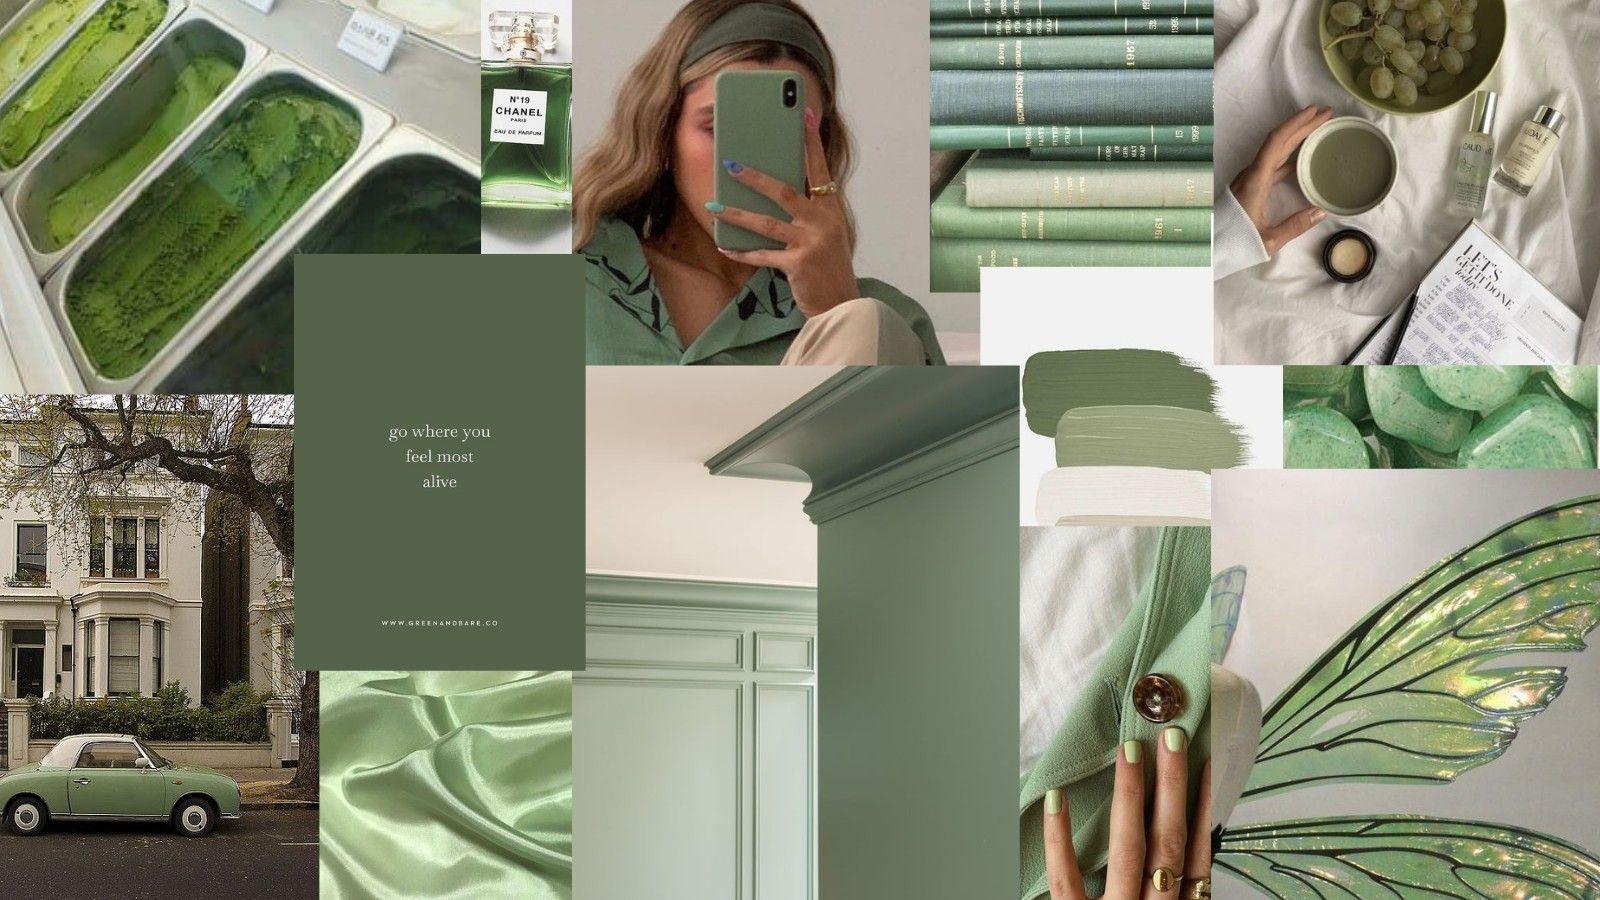 Sage Green Laptop Wallpapers - Top Free Sage Green Laptop Backgrounds ...